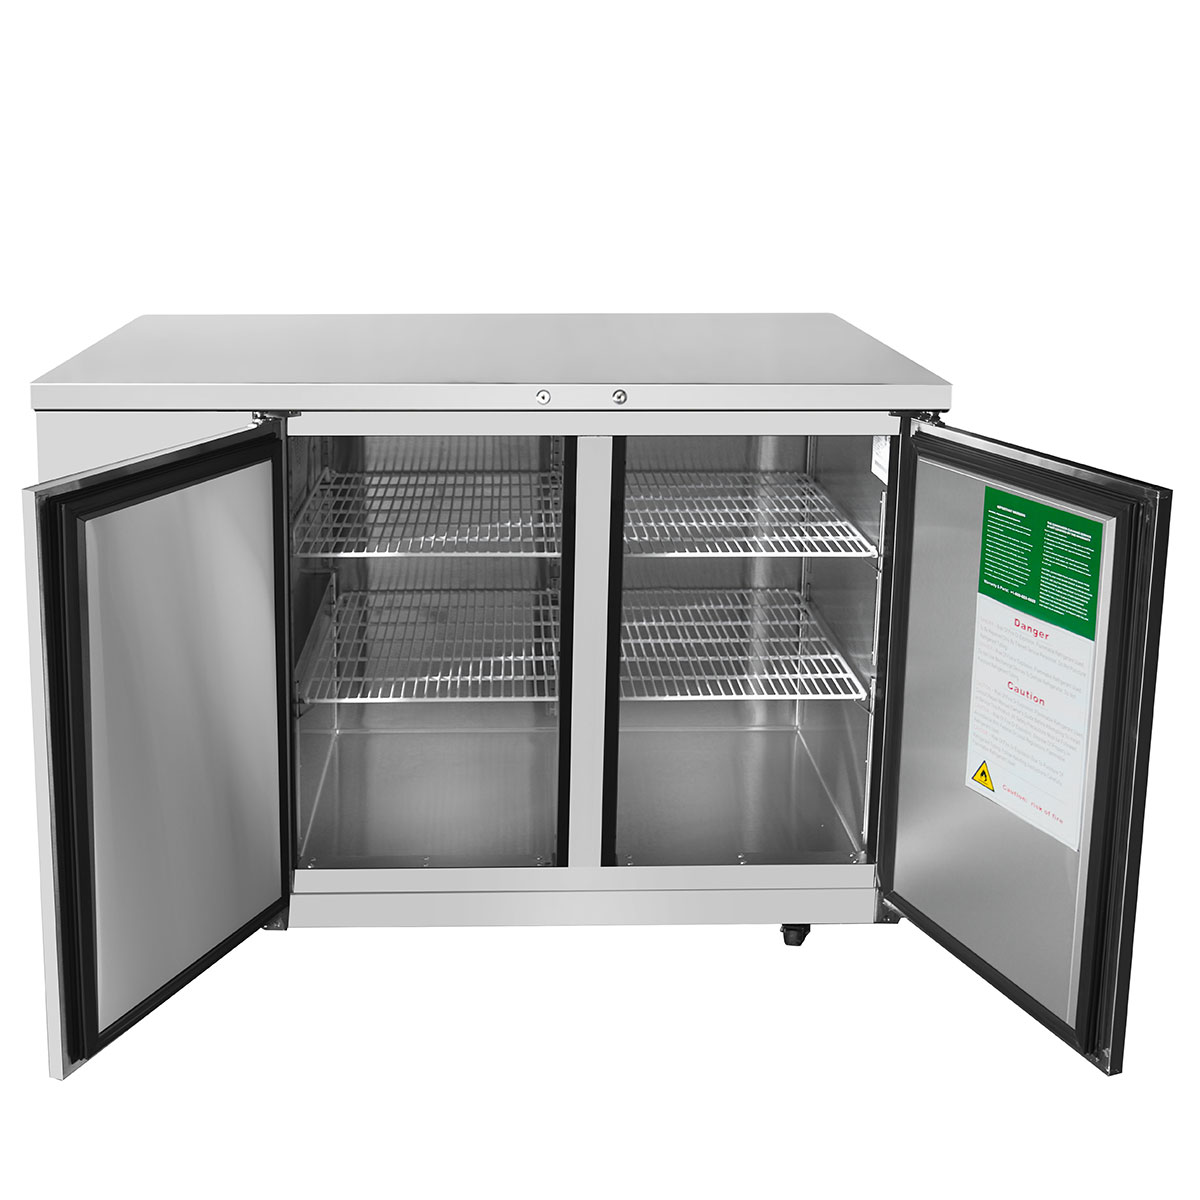 OPEN BOX 69 Back Bar Cooler Shallow Depth Refrigerator SBB69GR Atosa  #5932-OB